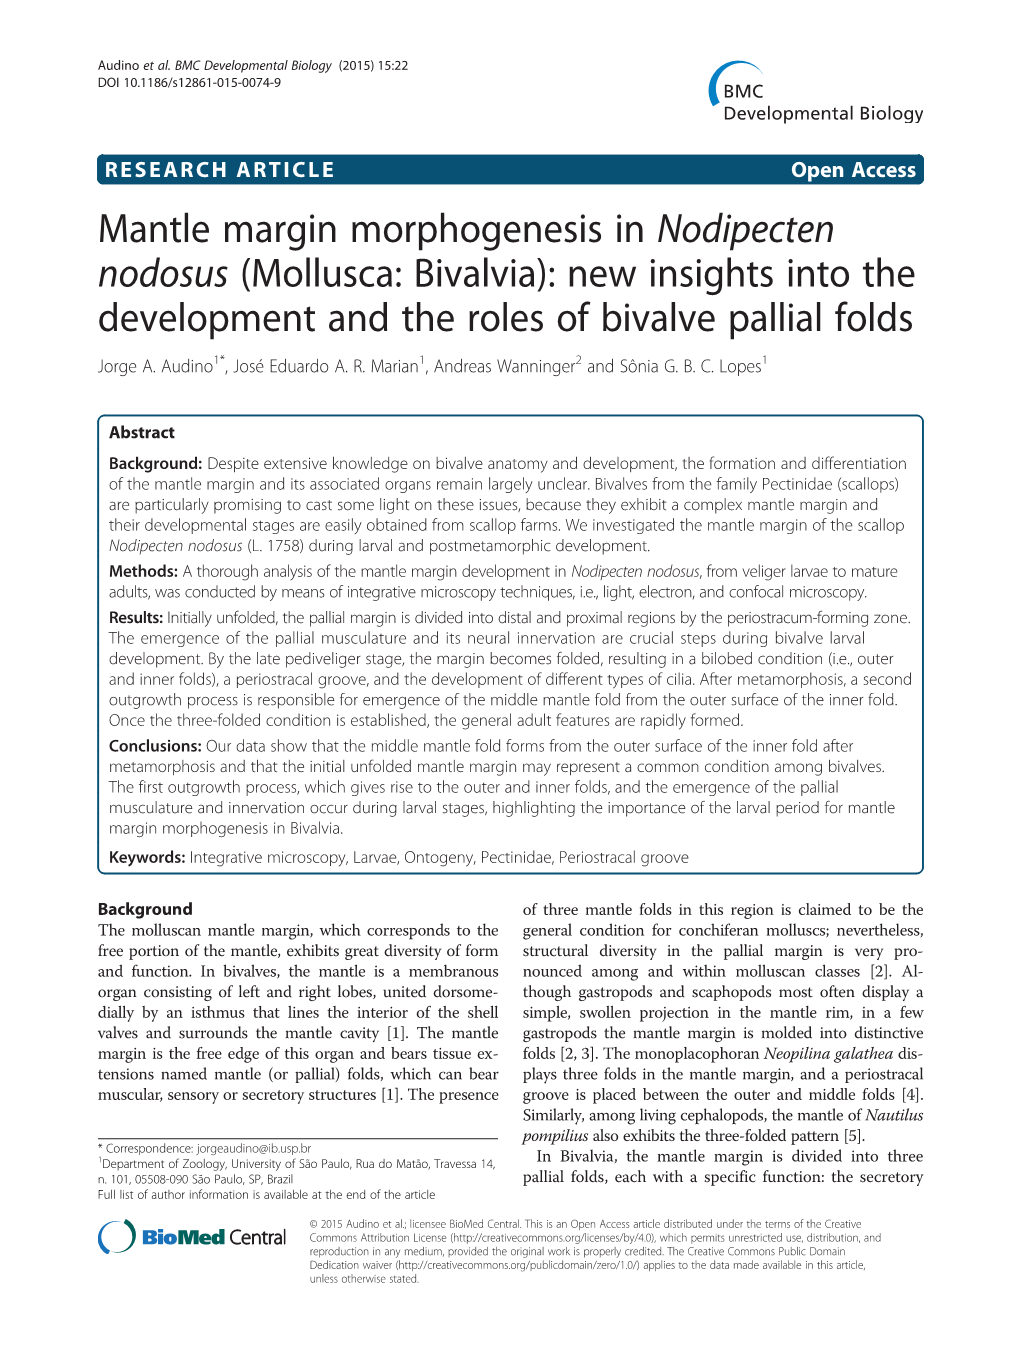 Mantle Margin Morphogenesis in Nodipecten Nodosus (Mollusca: Bivalvia): New Insights Into the Development and the Roles of Bivalve Pallial Folds Jorge A